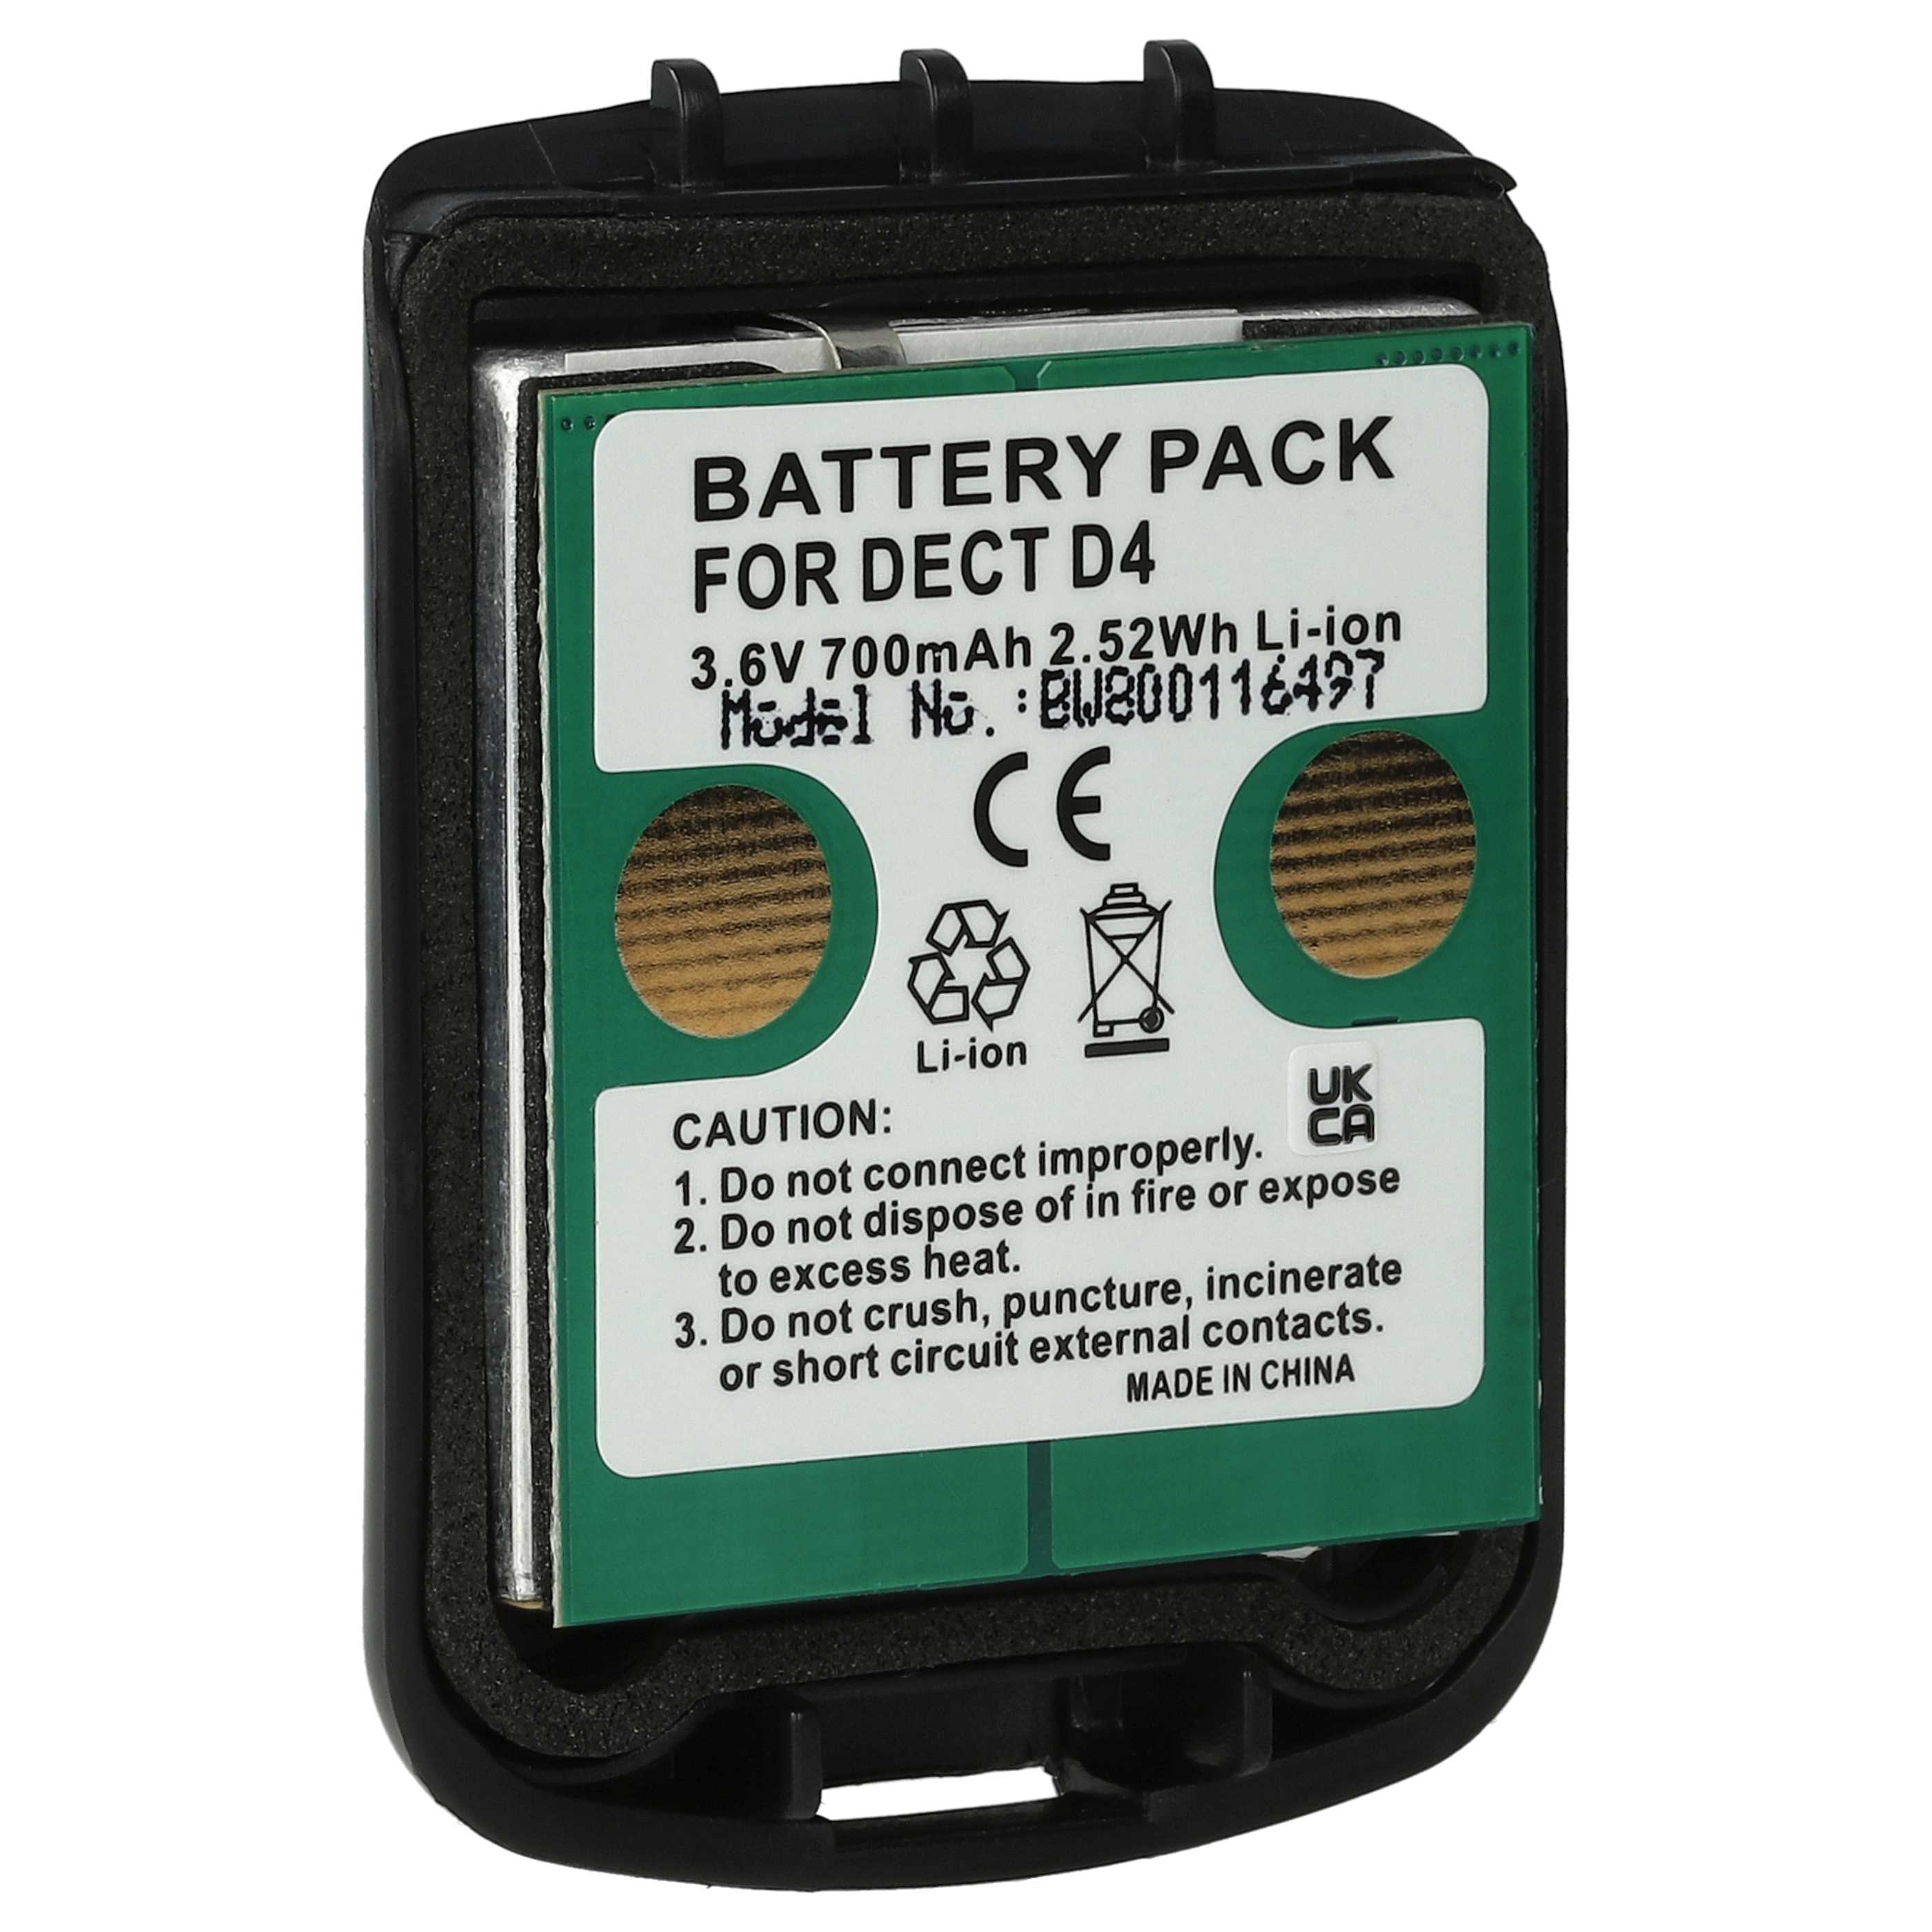 Landline Phone Battery Replacement for 5010808000, 5010808030 - 700mAh 3.7V Li-Ion